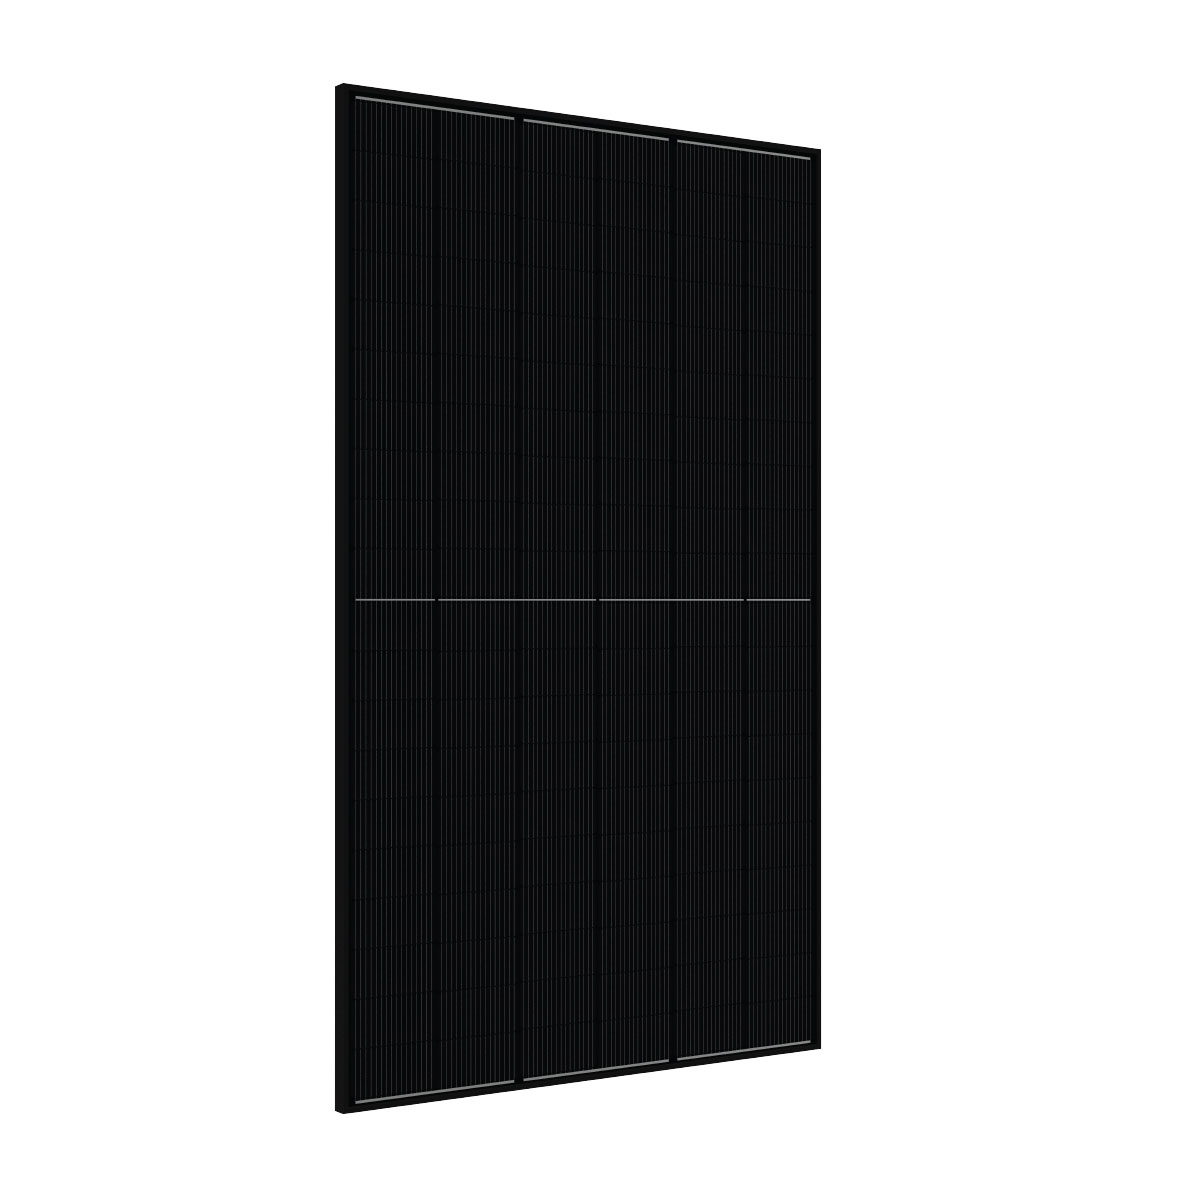 TommaTech 430Wp 108TN M10 TopCon Dark Series Solar Panel